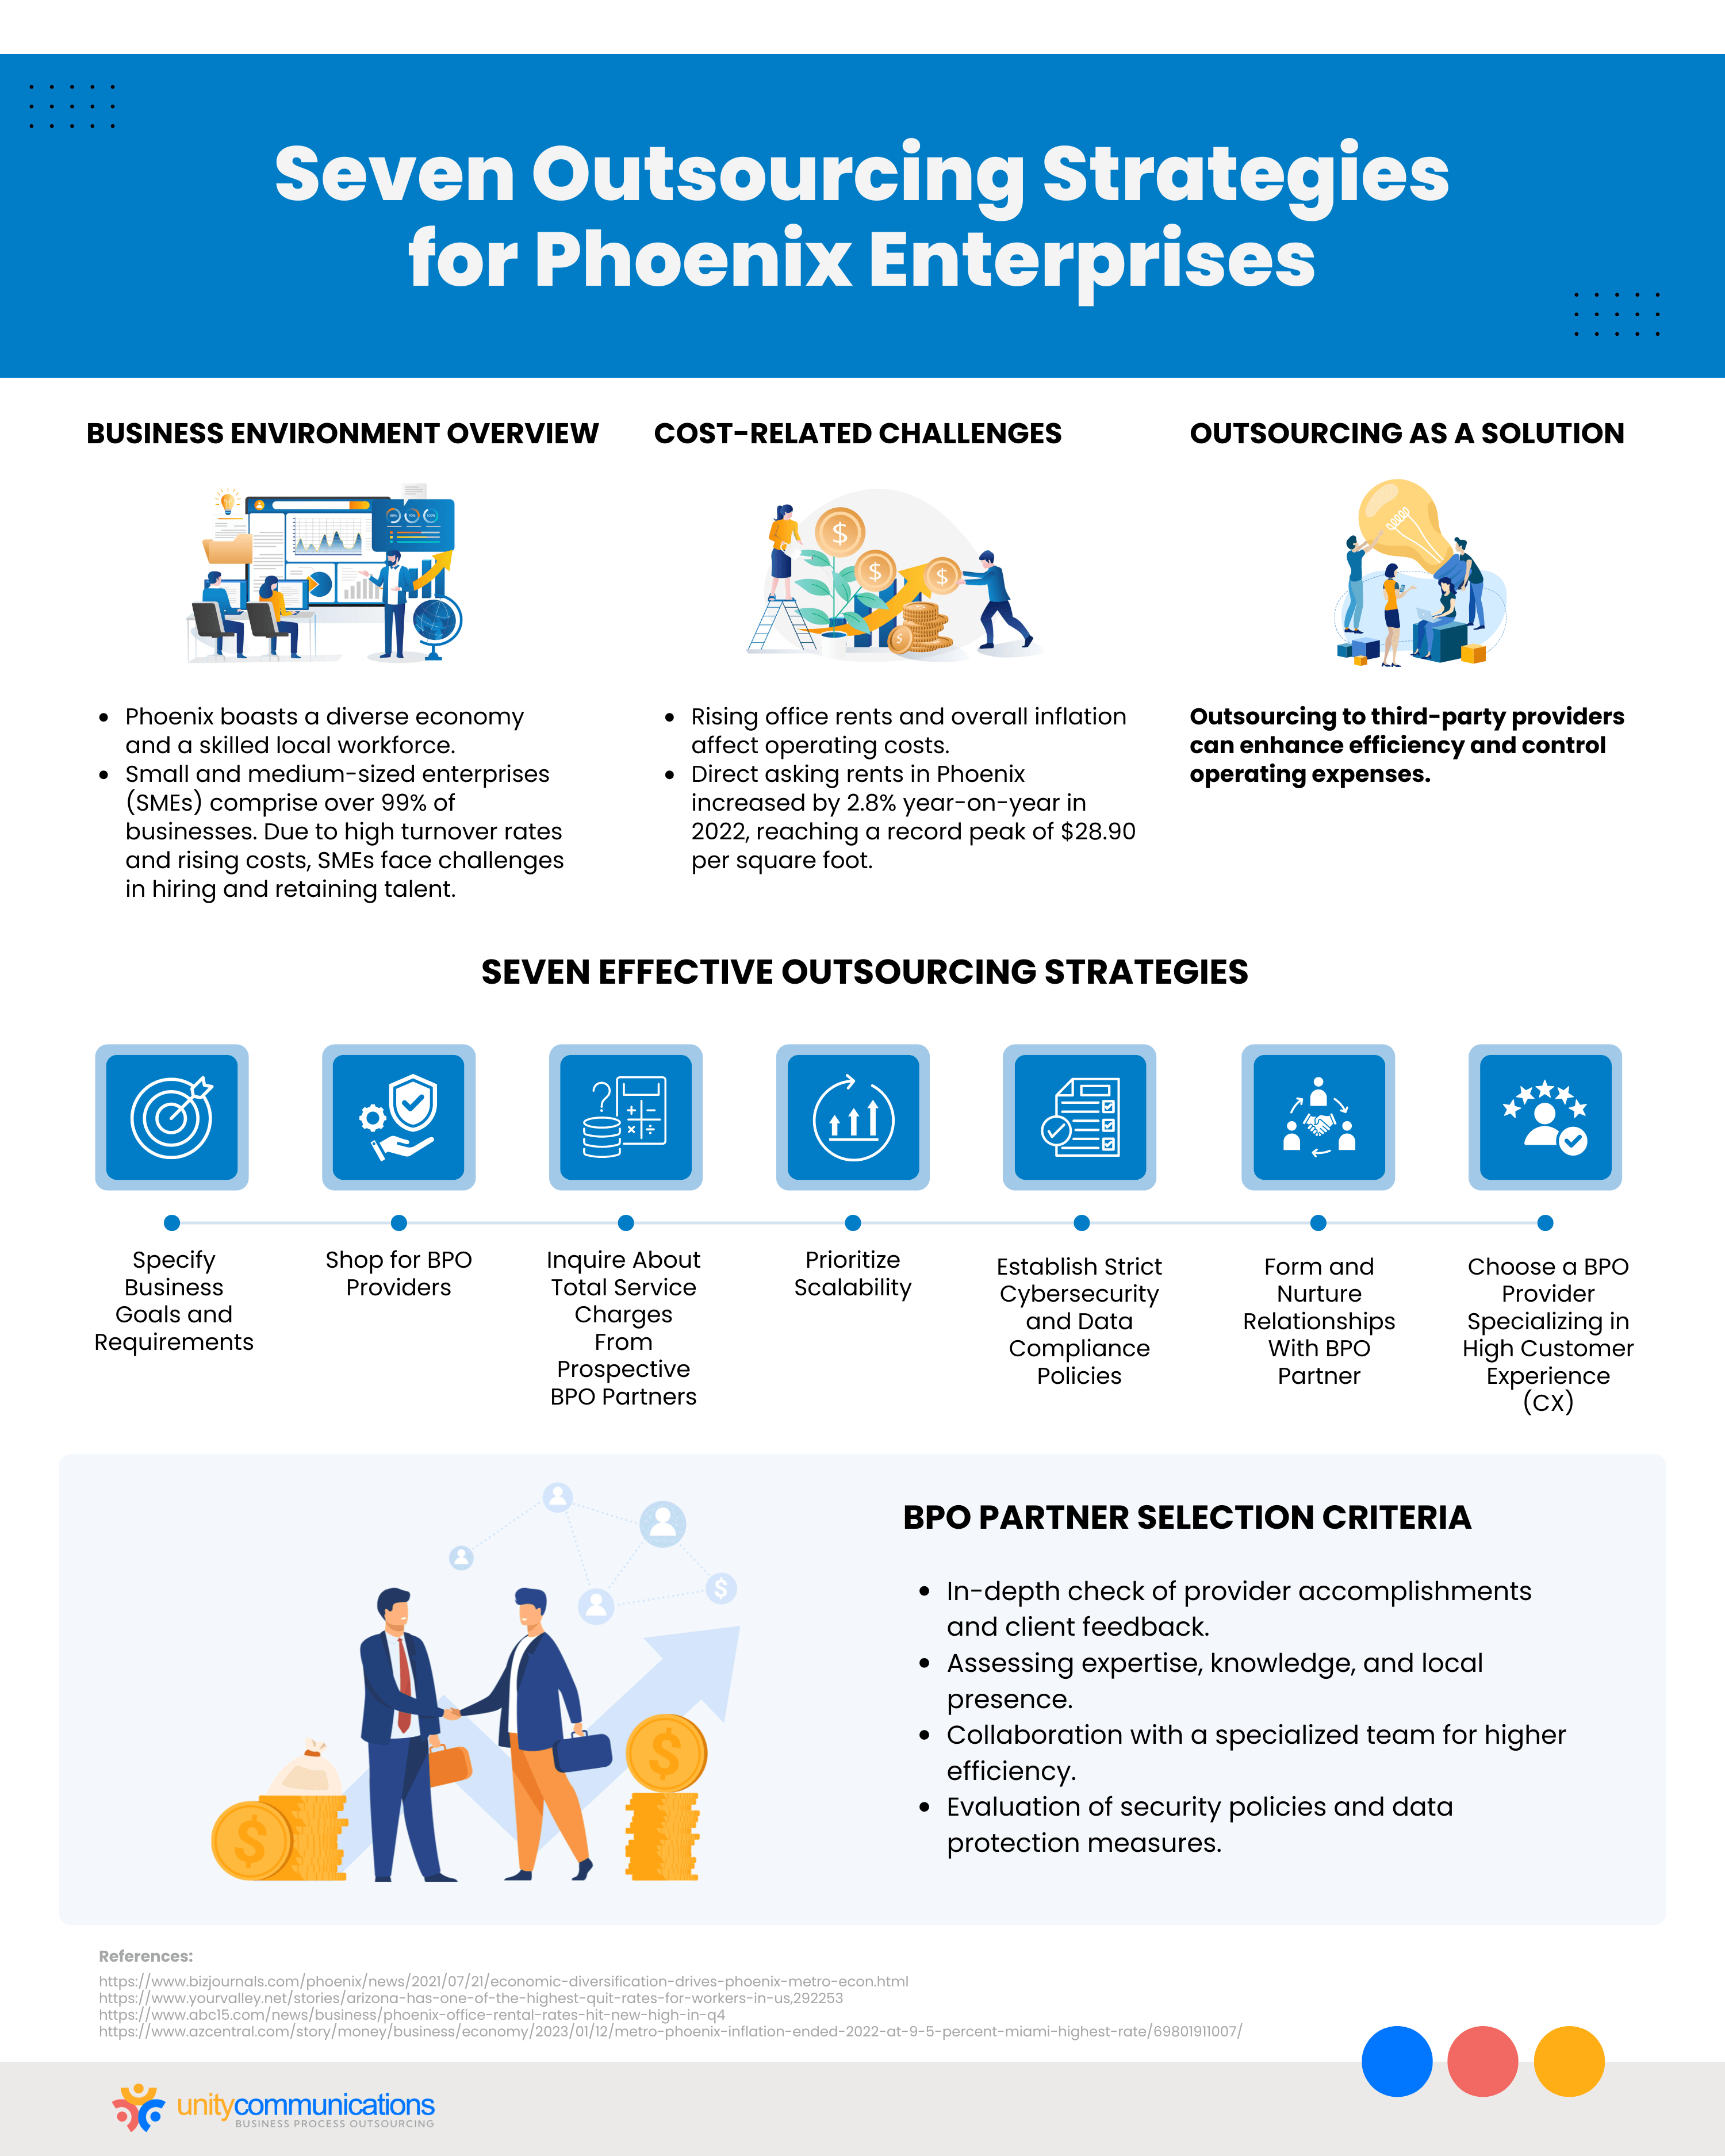 Seven Outsourcing Strategies for Phoenix Enterprises